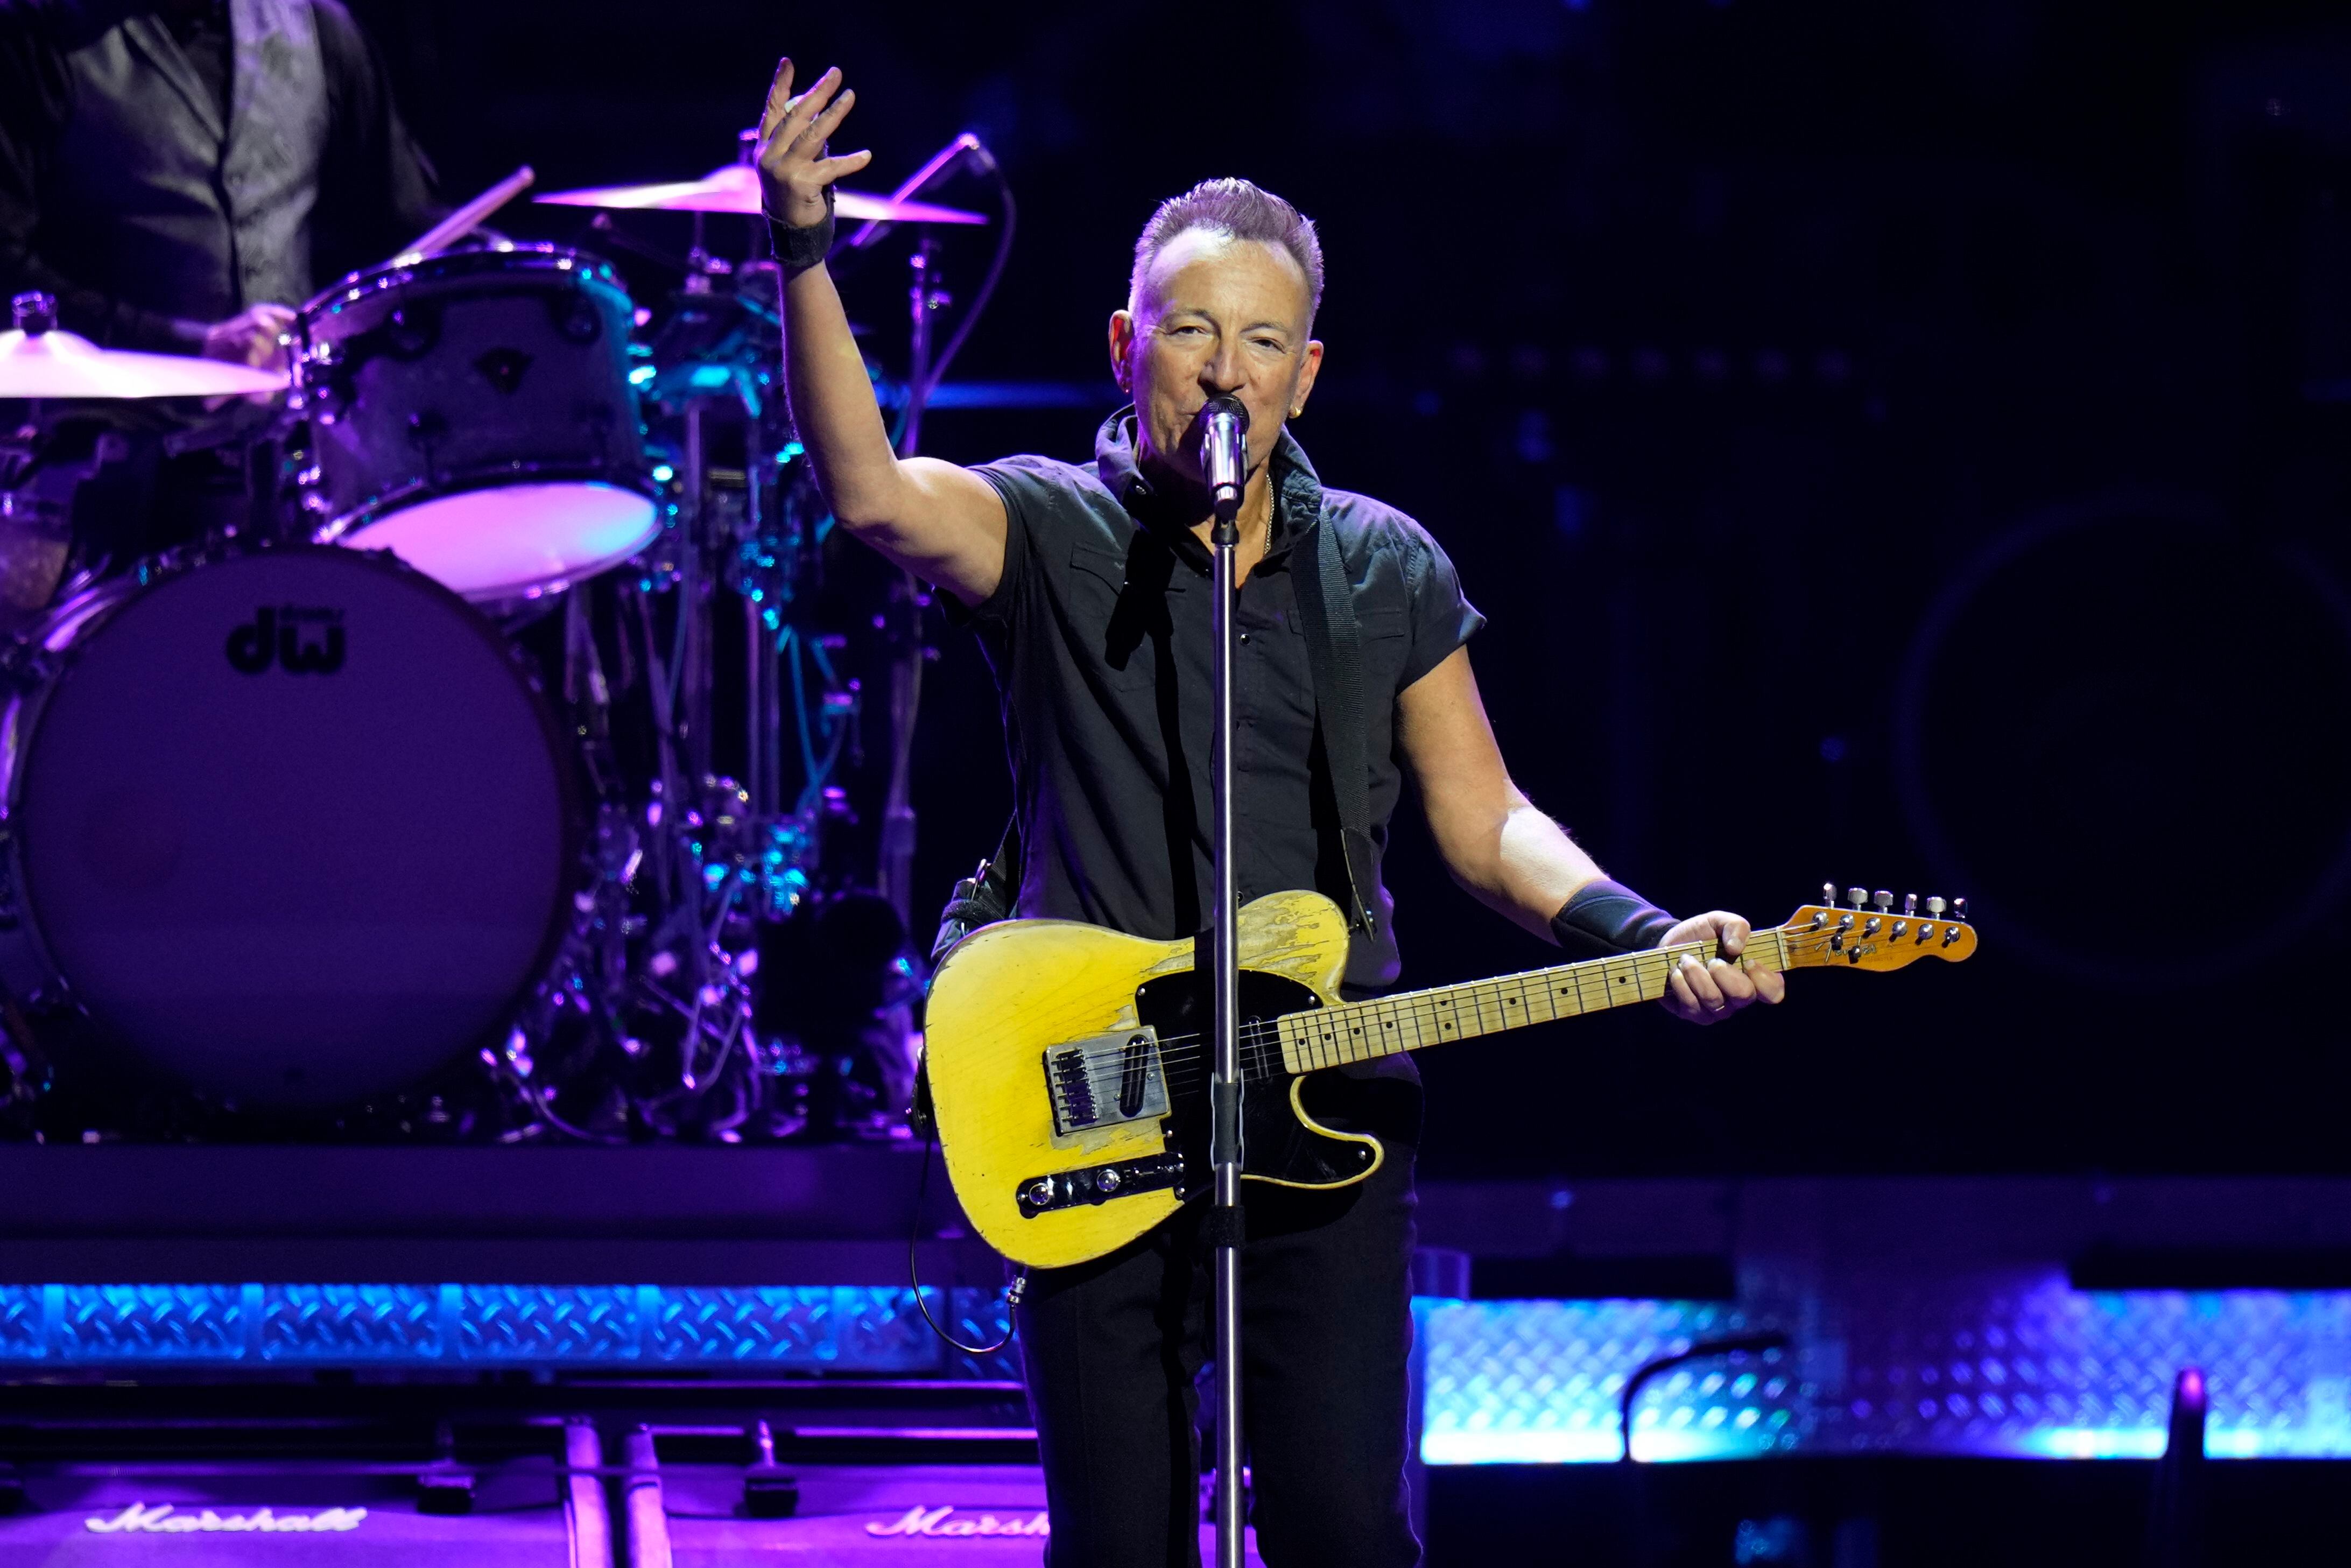 Illness sidelines Springsteen tour as 3 concerts postponed